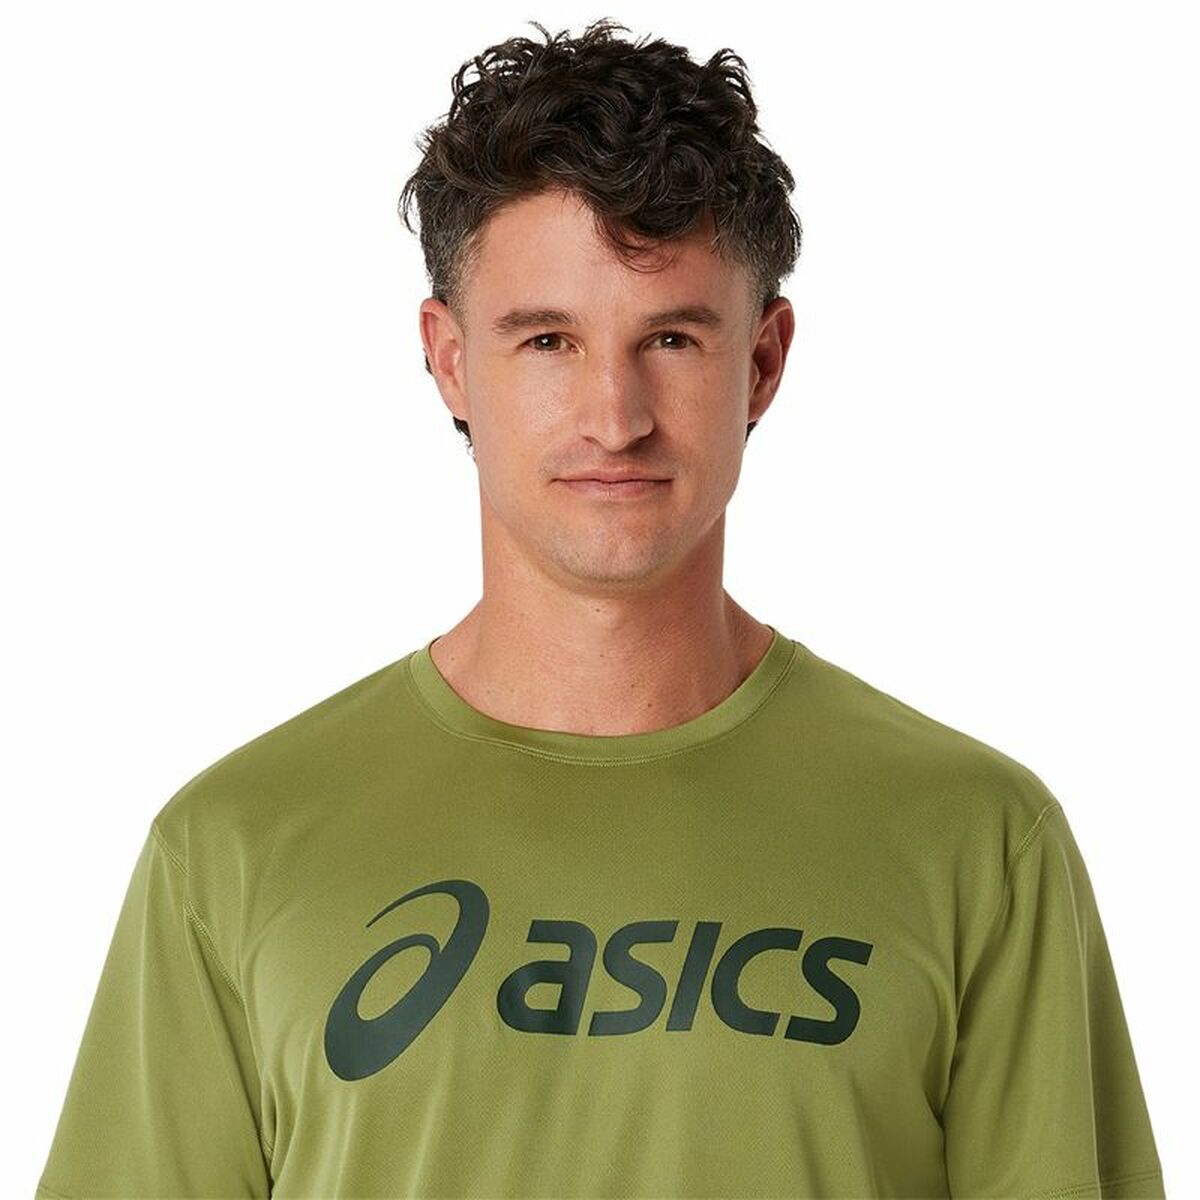 Herren Kurzarm-T-Shirt Asics Core Top  Militärgrün